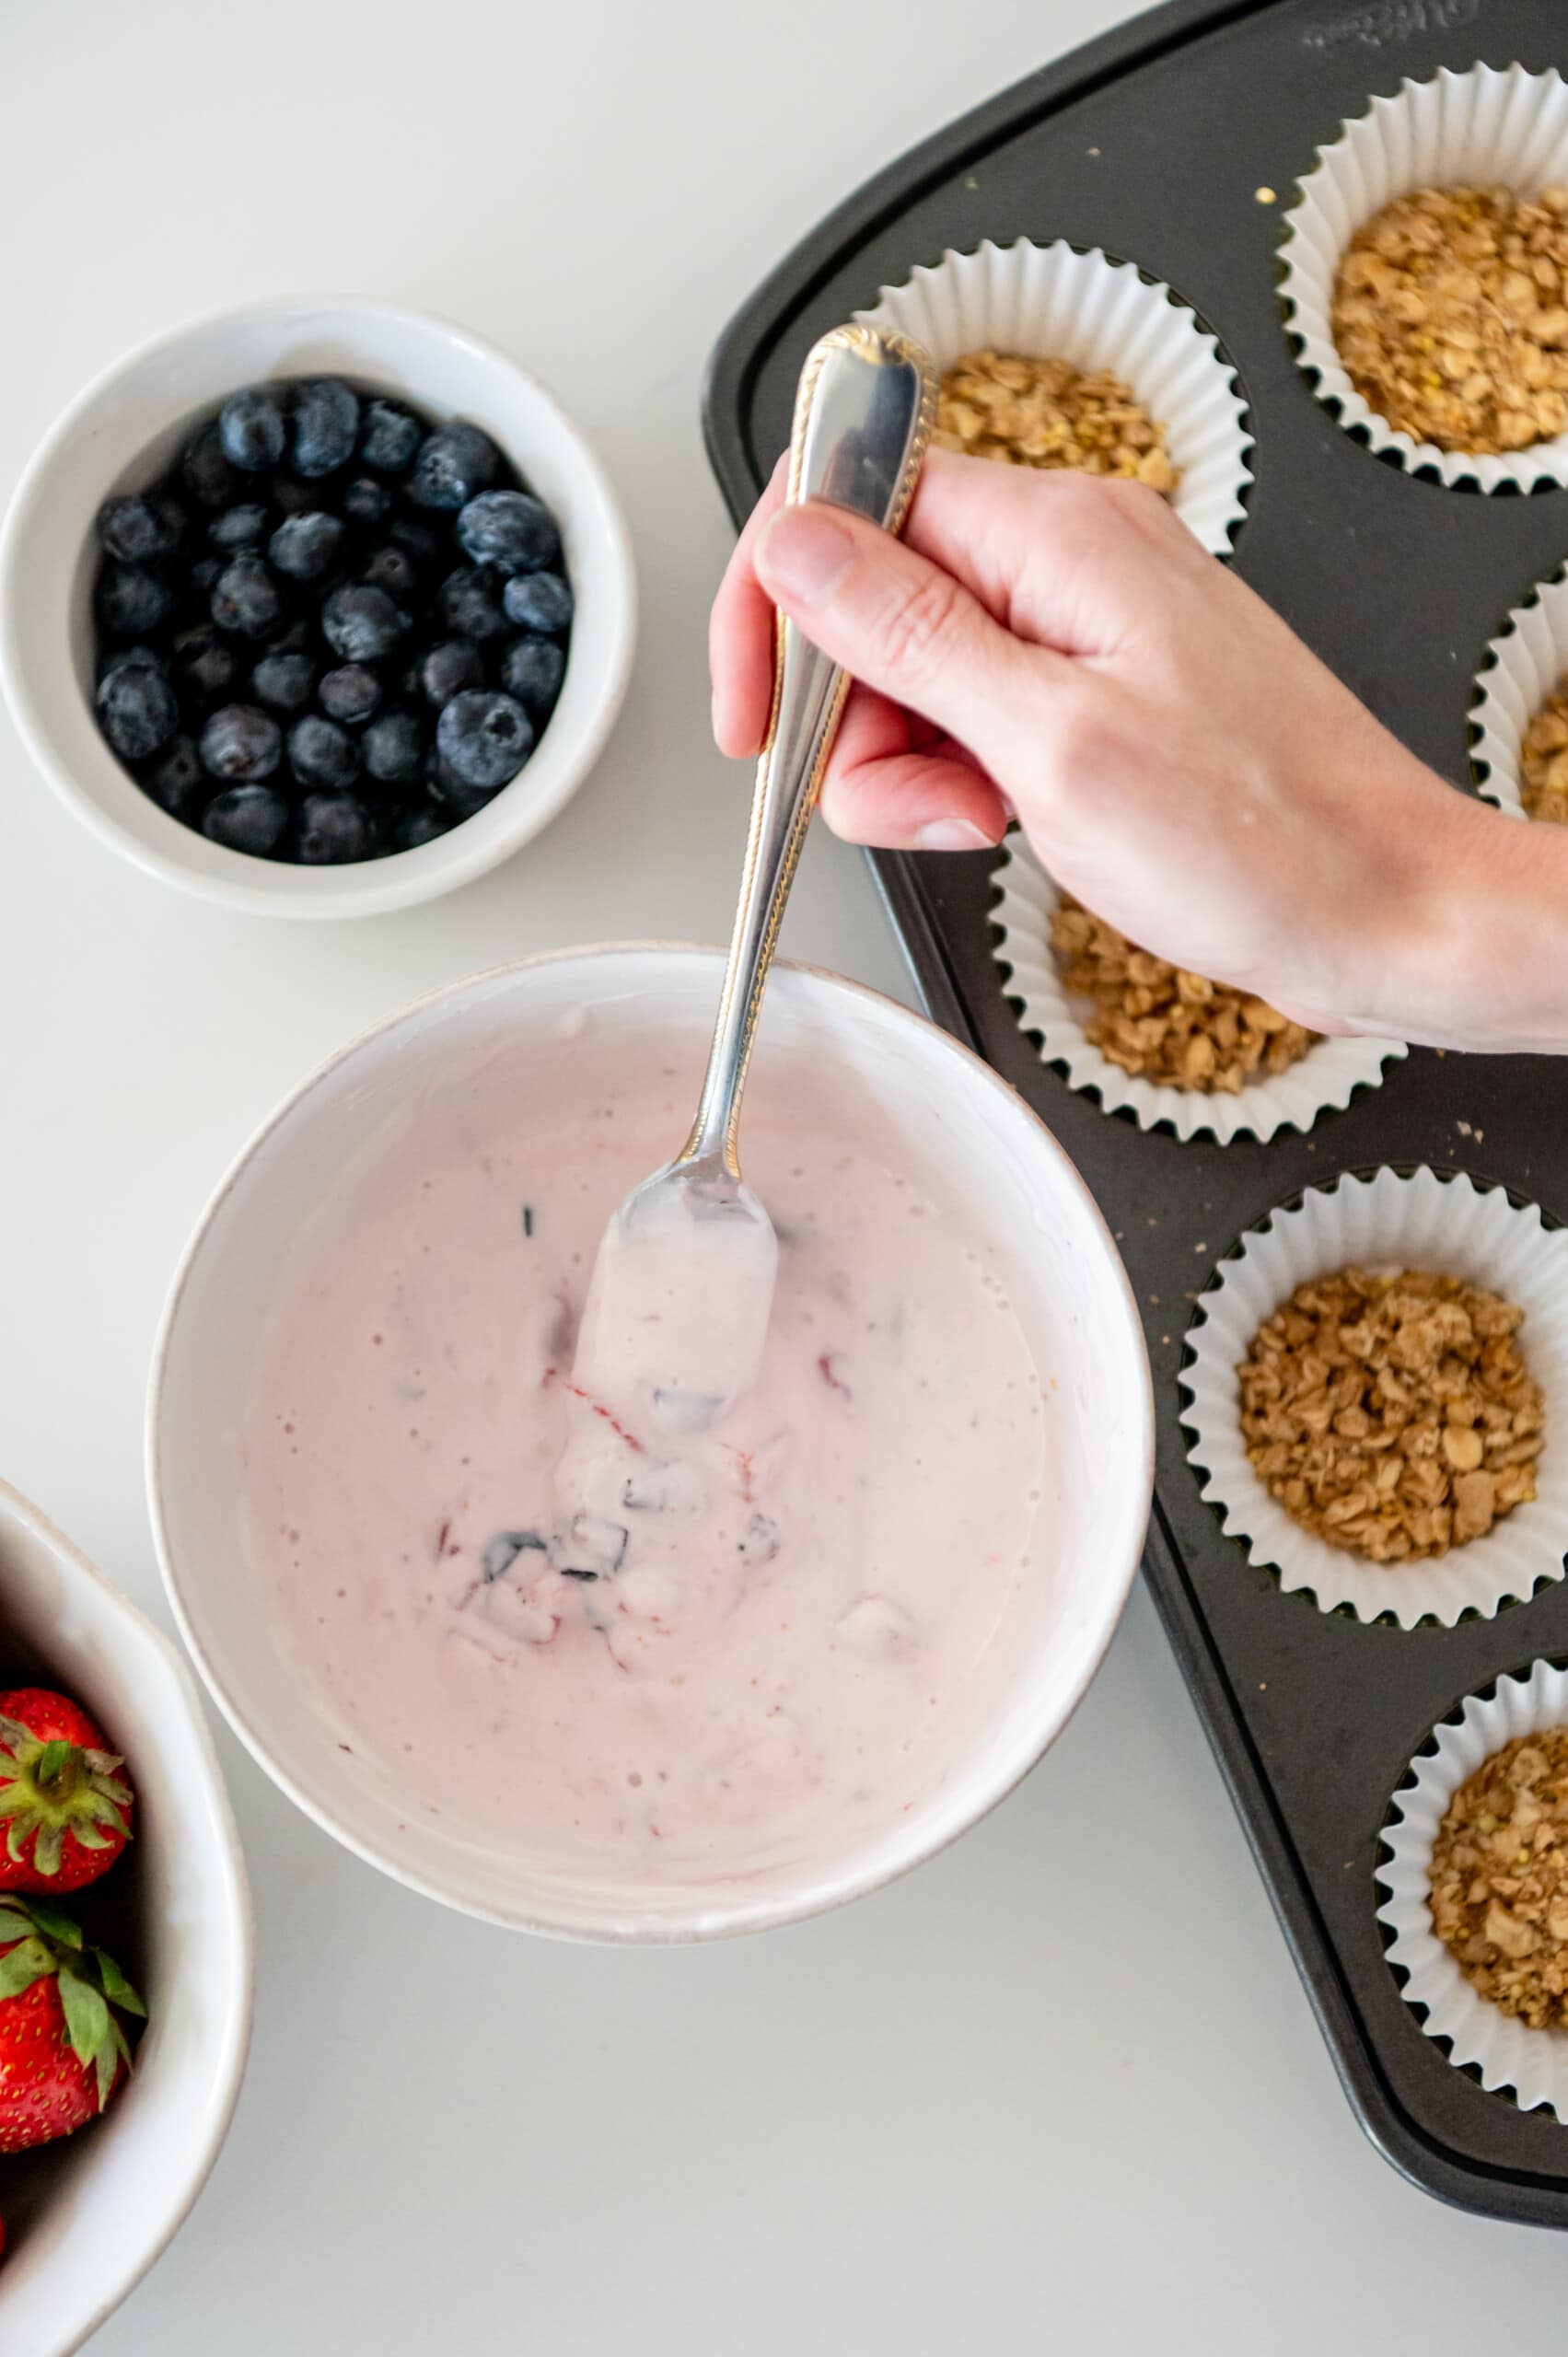 Berries mixed into a bowl of yogurt